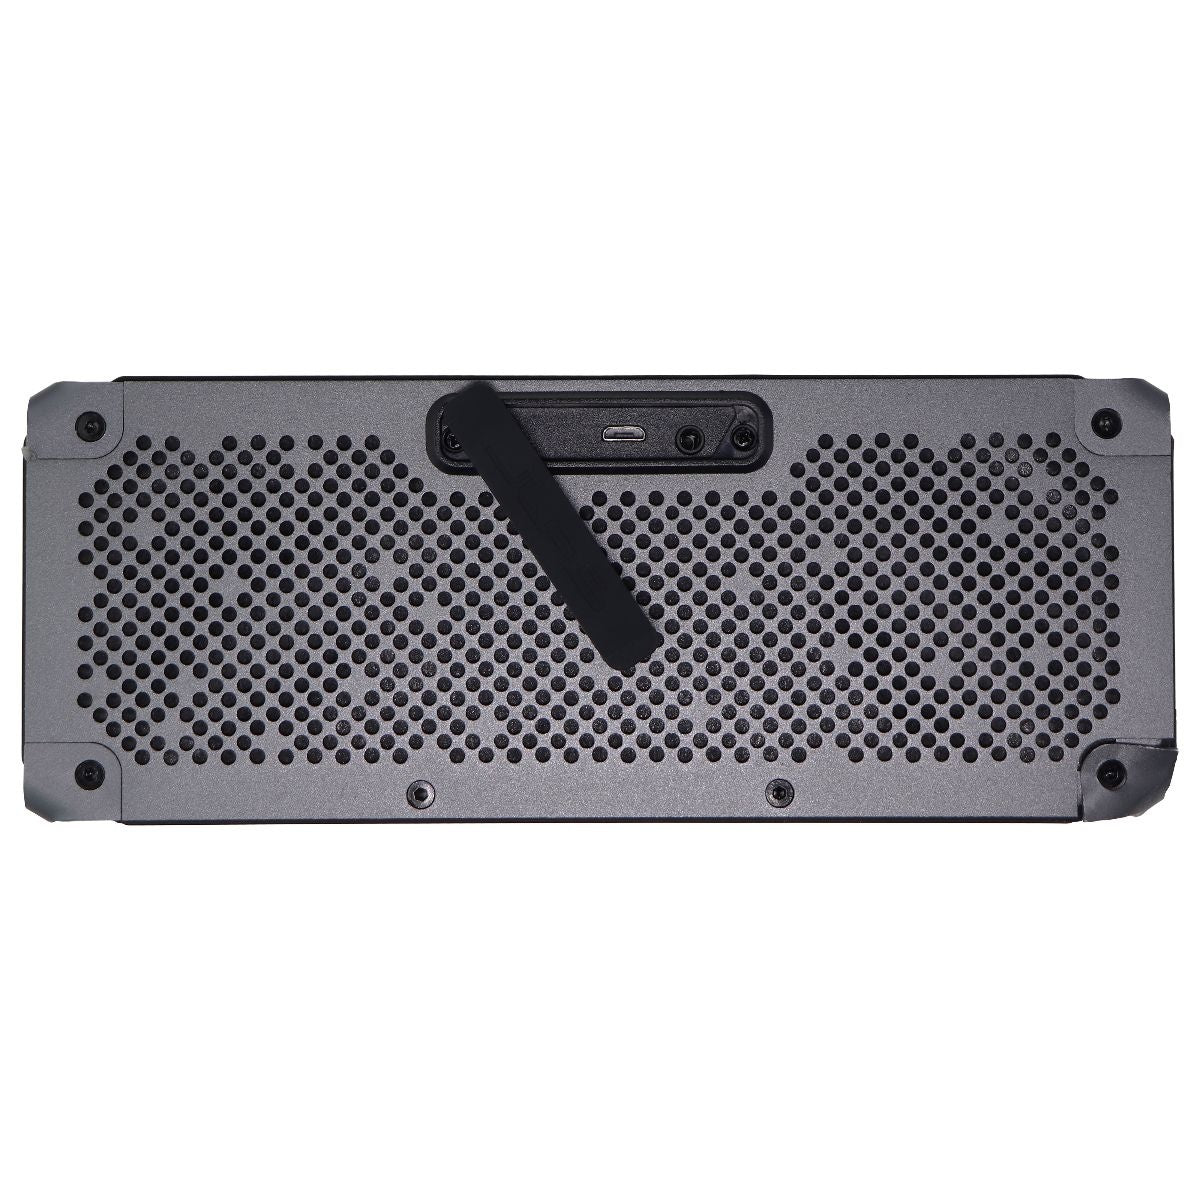 JLab Crasher XL Splashproof Portable Bluetooth Speaker - Gunmetal Gray Cell Phone - Audio Docks & Speakers JLAB    - Simple Cell Bulk Wholesale Pricing - USA Seller